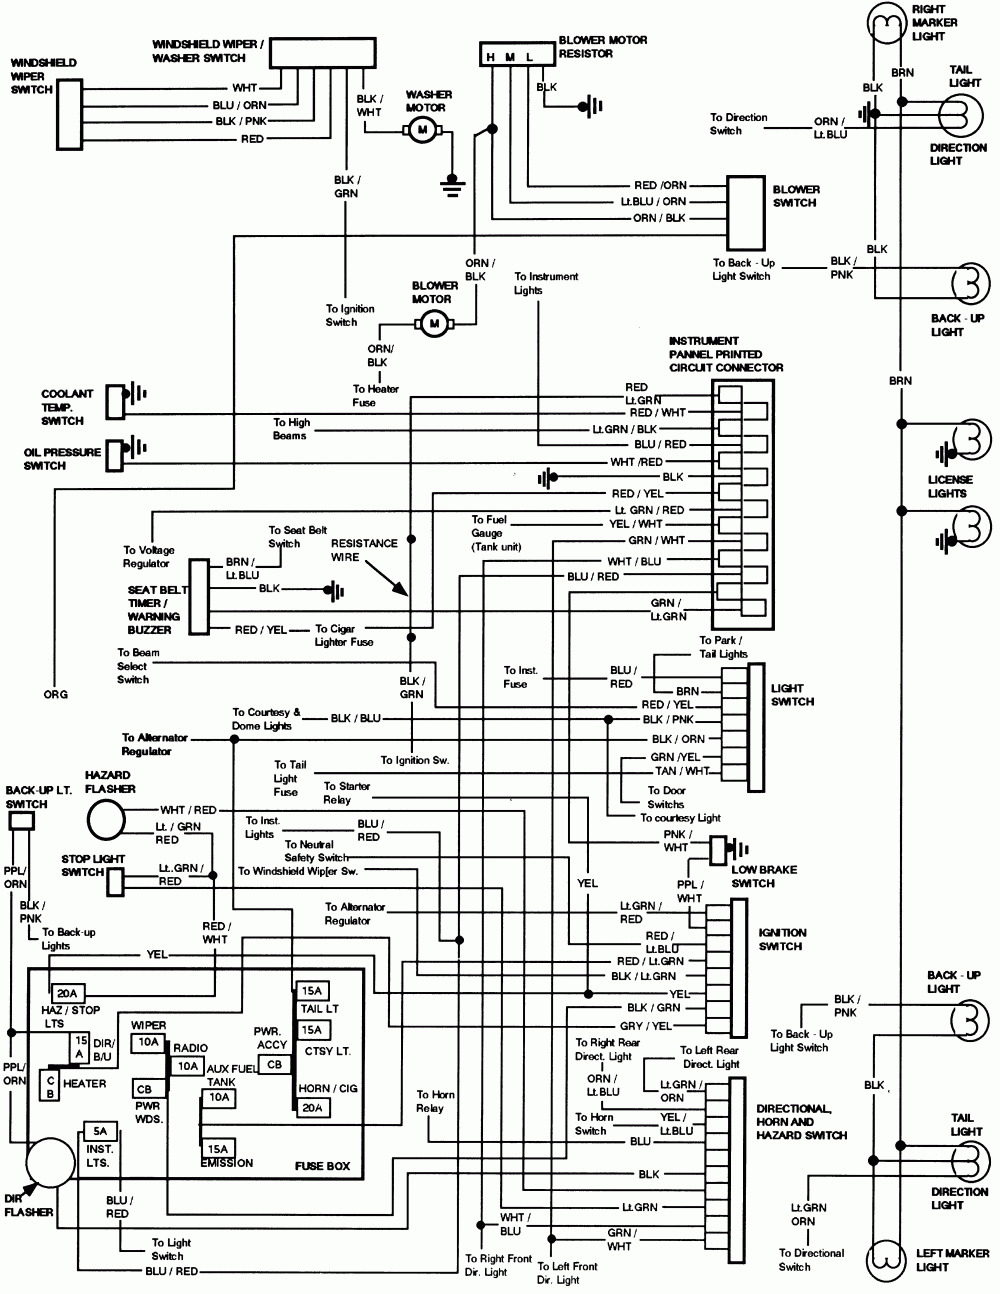 Ac Wiring Diagram 89 Ford - Wiring Diagram Data Oreo - Wiring Diagram For